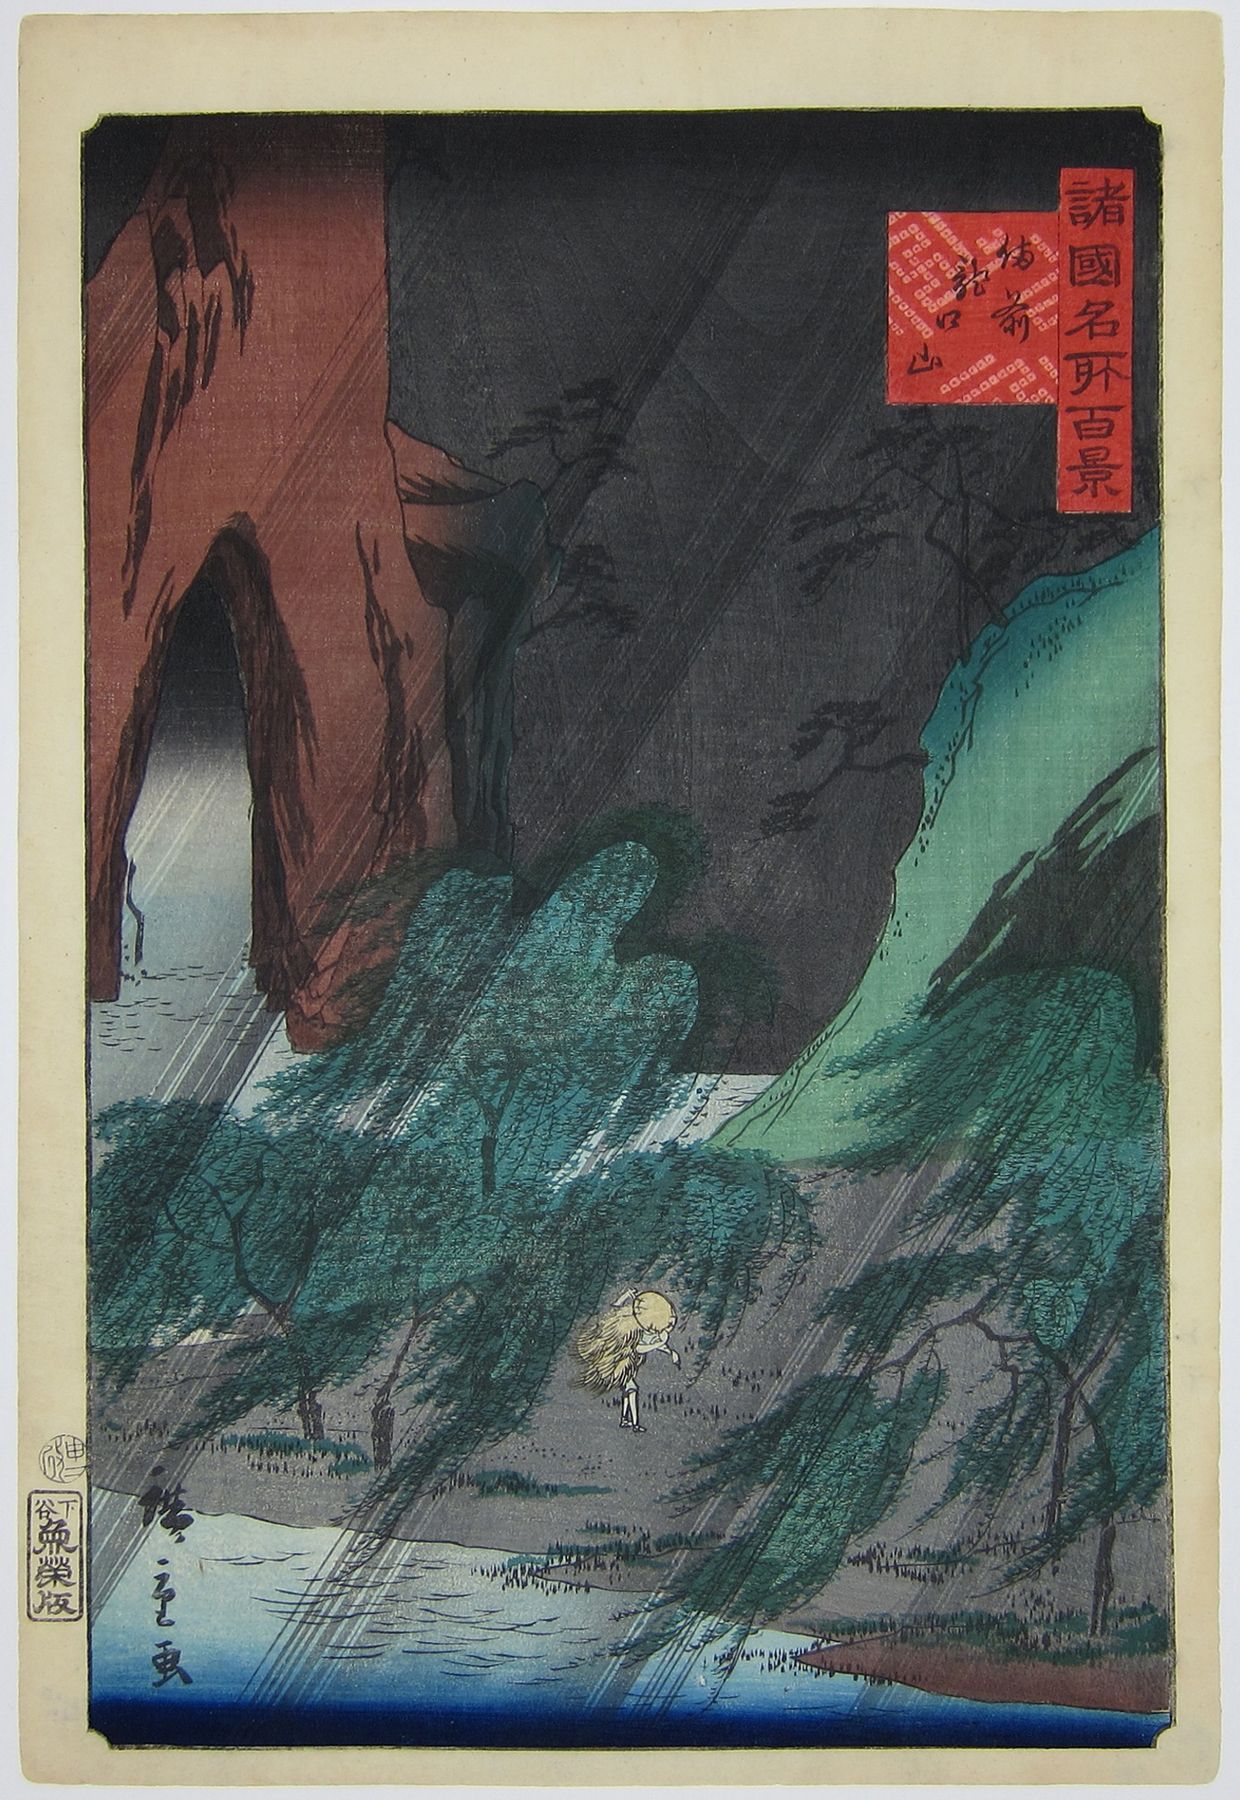 Heavy Rain at Tatsuguchi in Bizen Province. 1860.